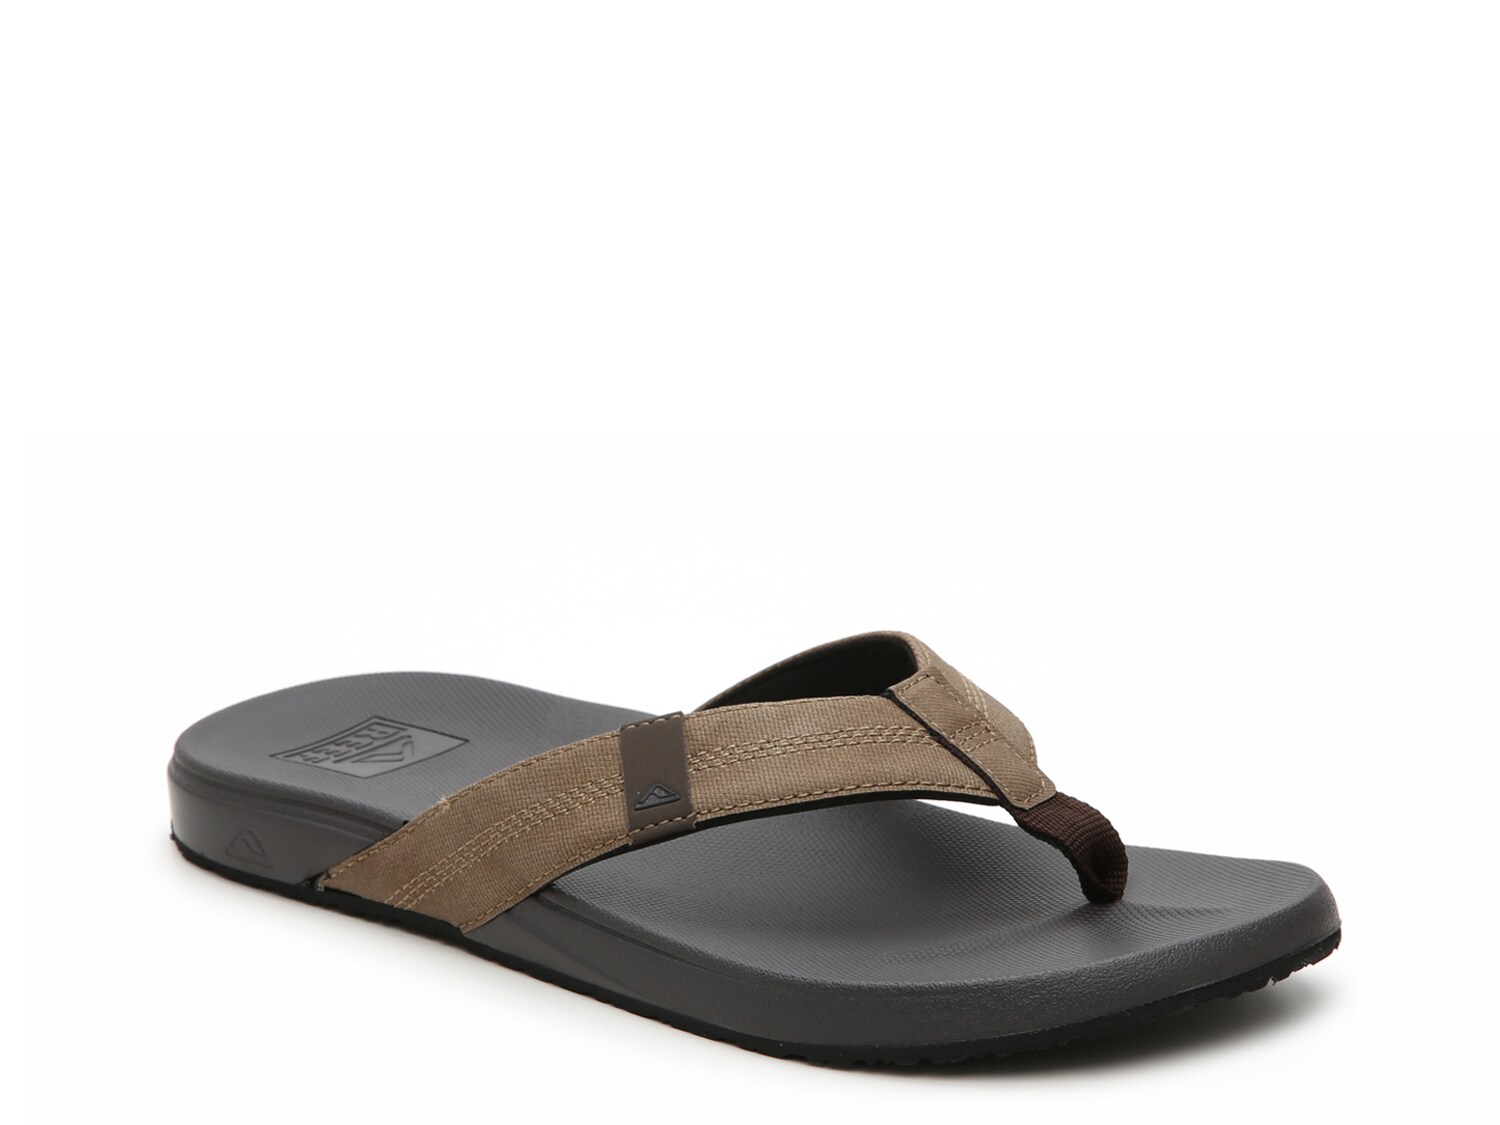 gents sandal online shopping